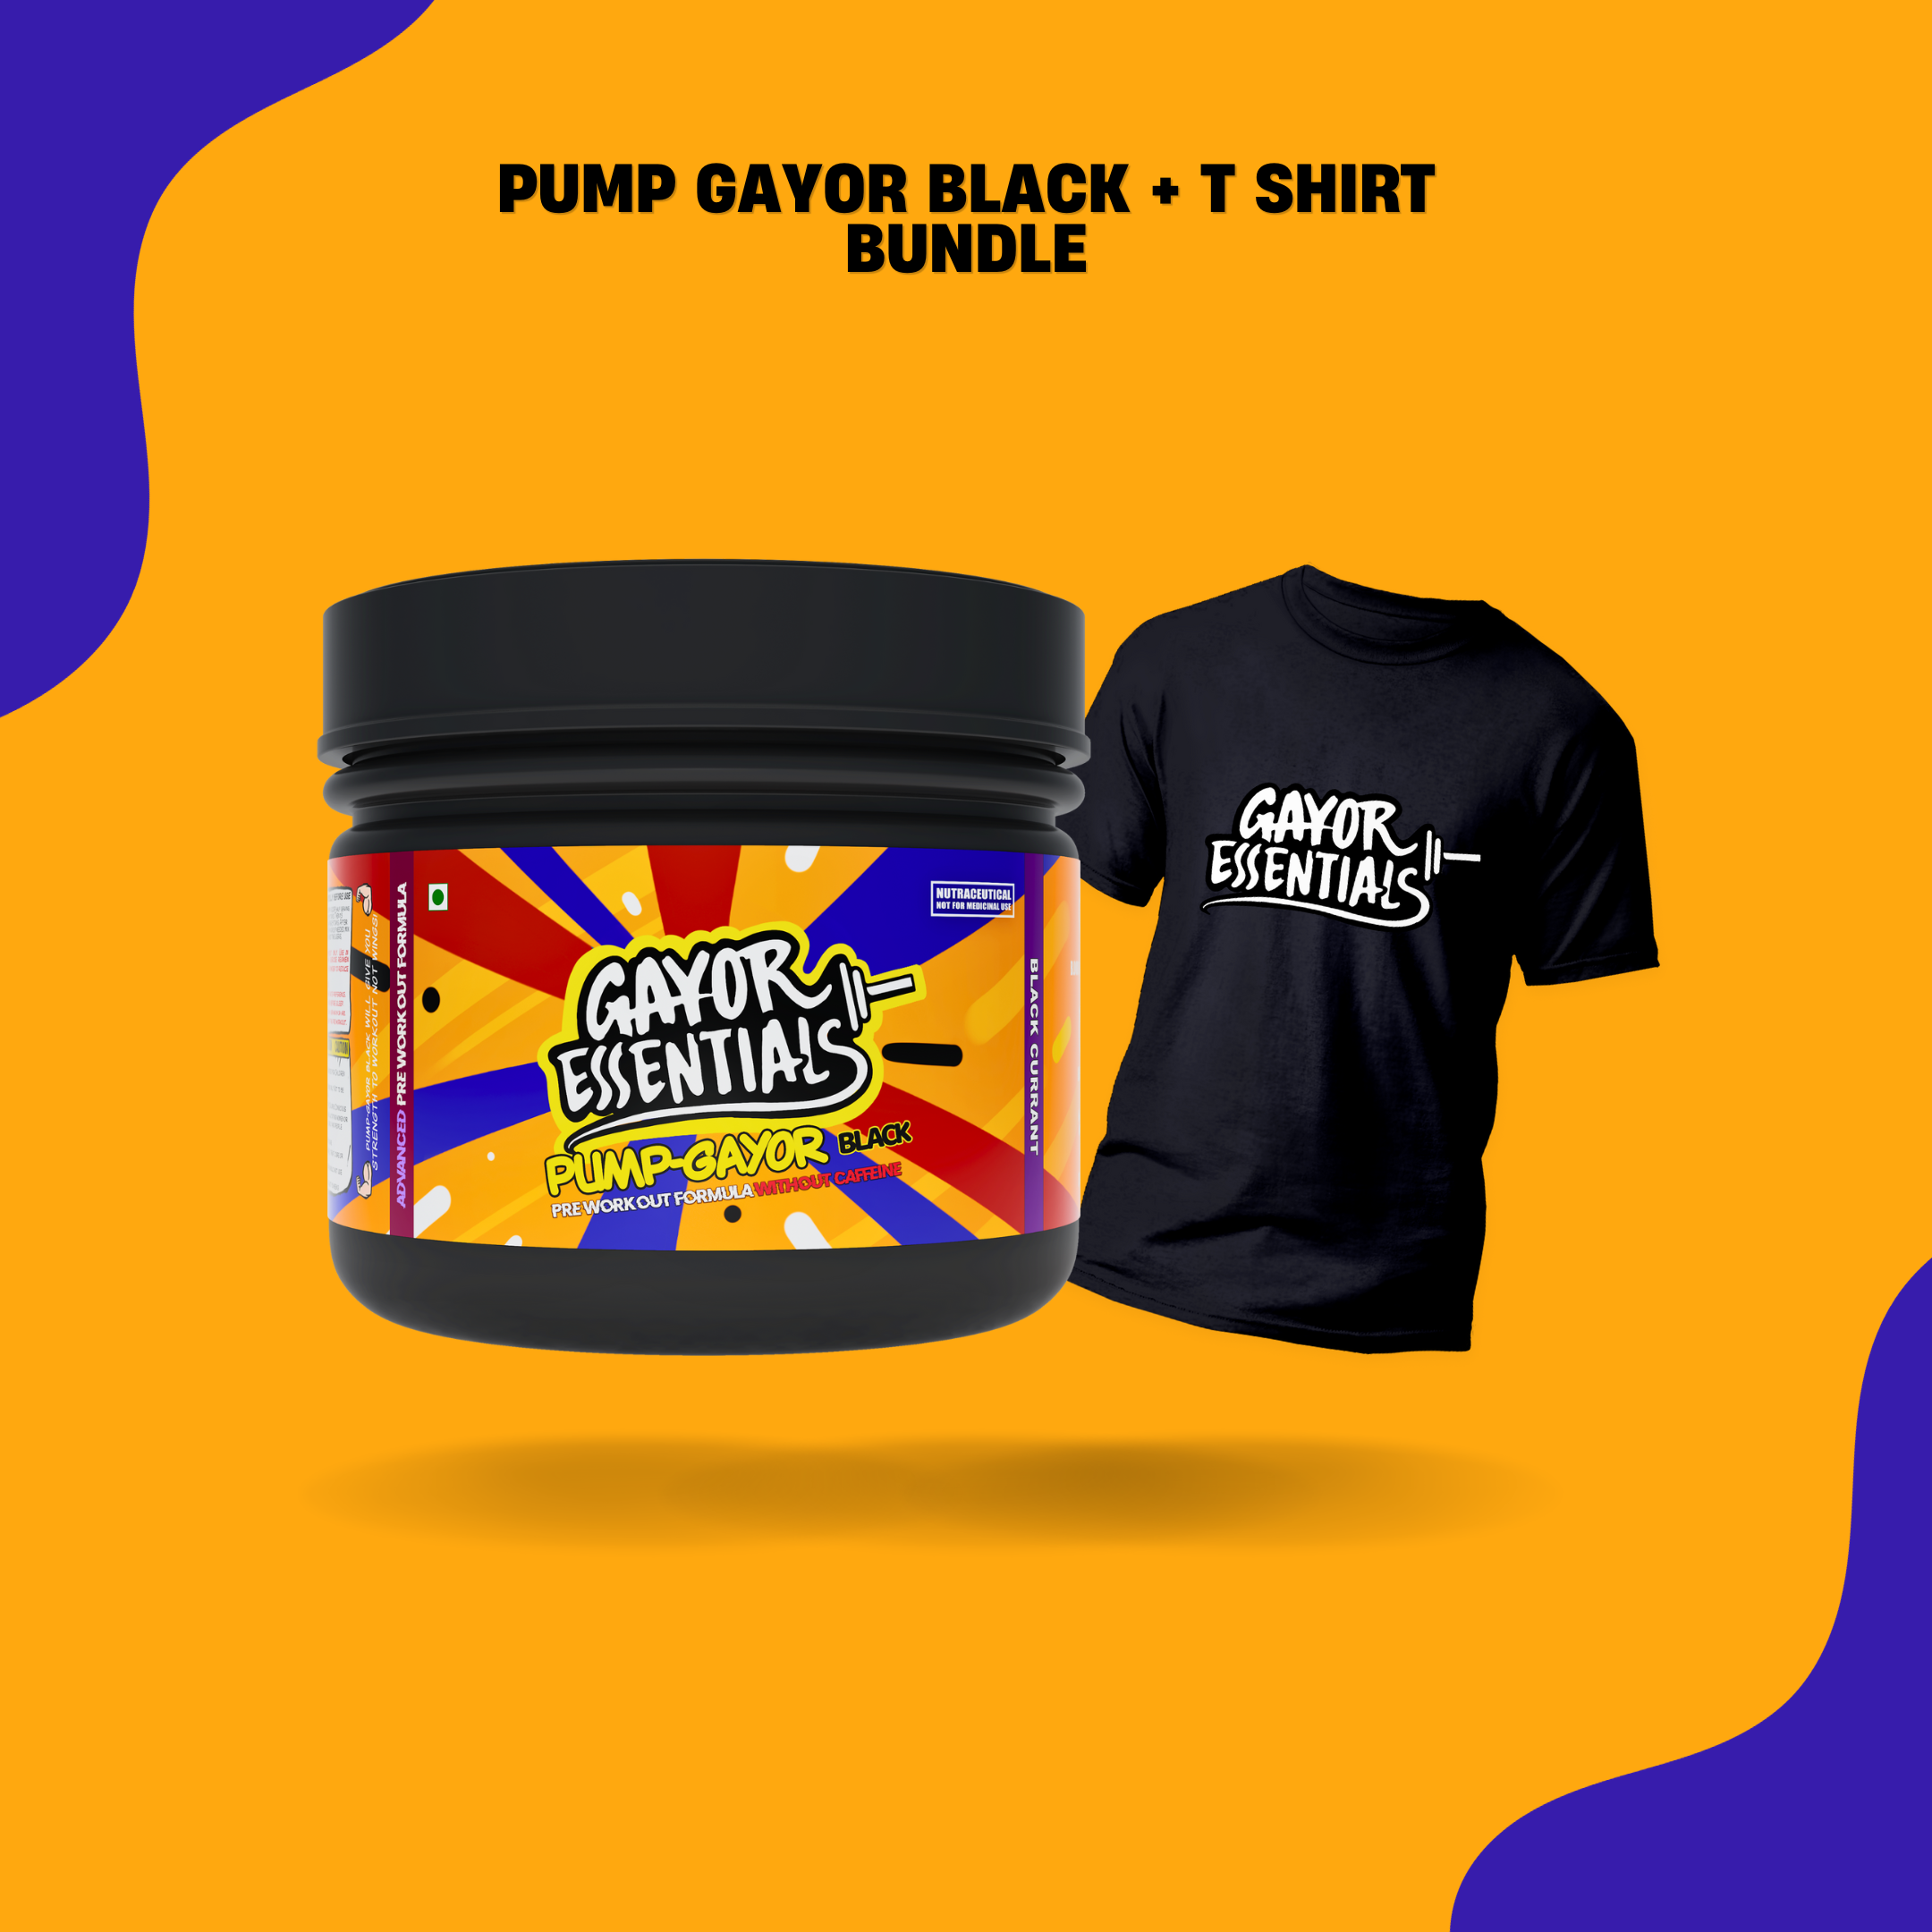 Pump Gayor Black (without caffeine) + T Shirt Bundle